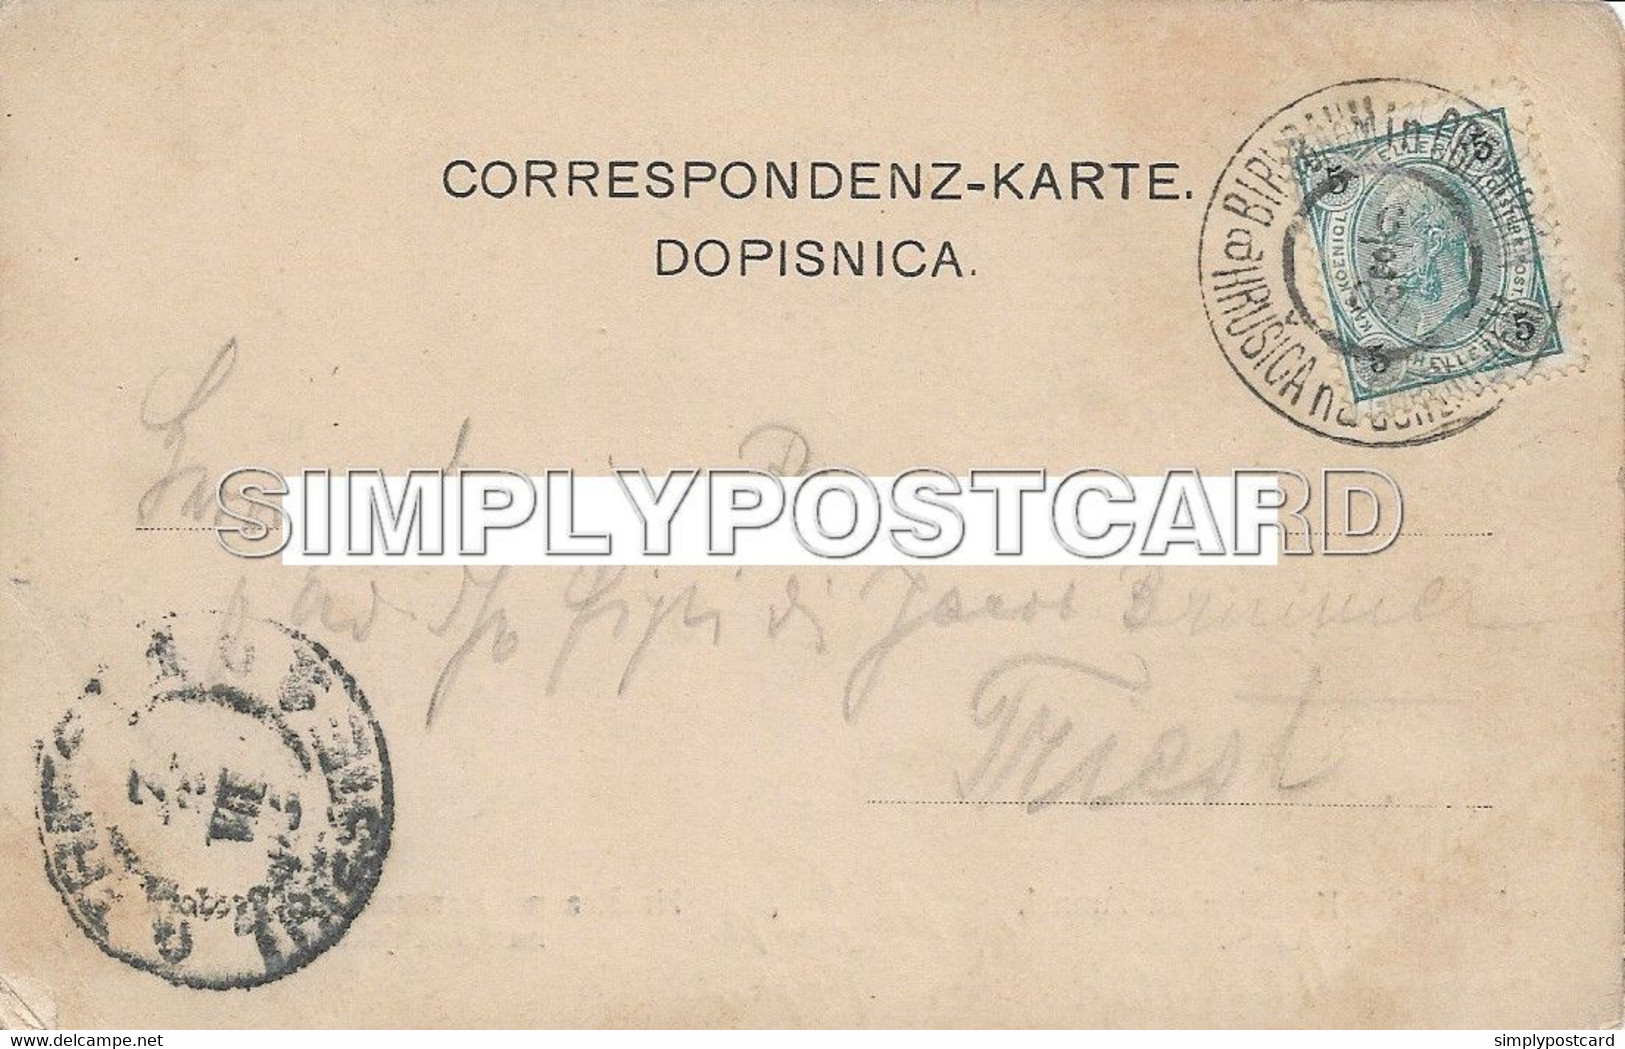 OLD  POSTCARD - BIRNBAUM BEI KARAWANKEN  TUNNEL OBERKRAIN - VIAGGIATA 1903 - B19 - Slovenia